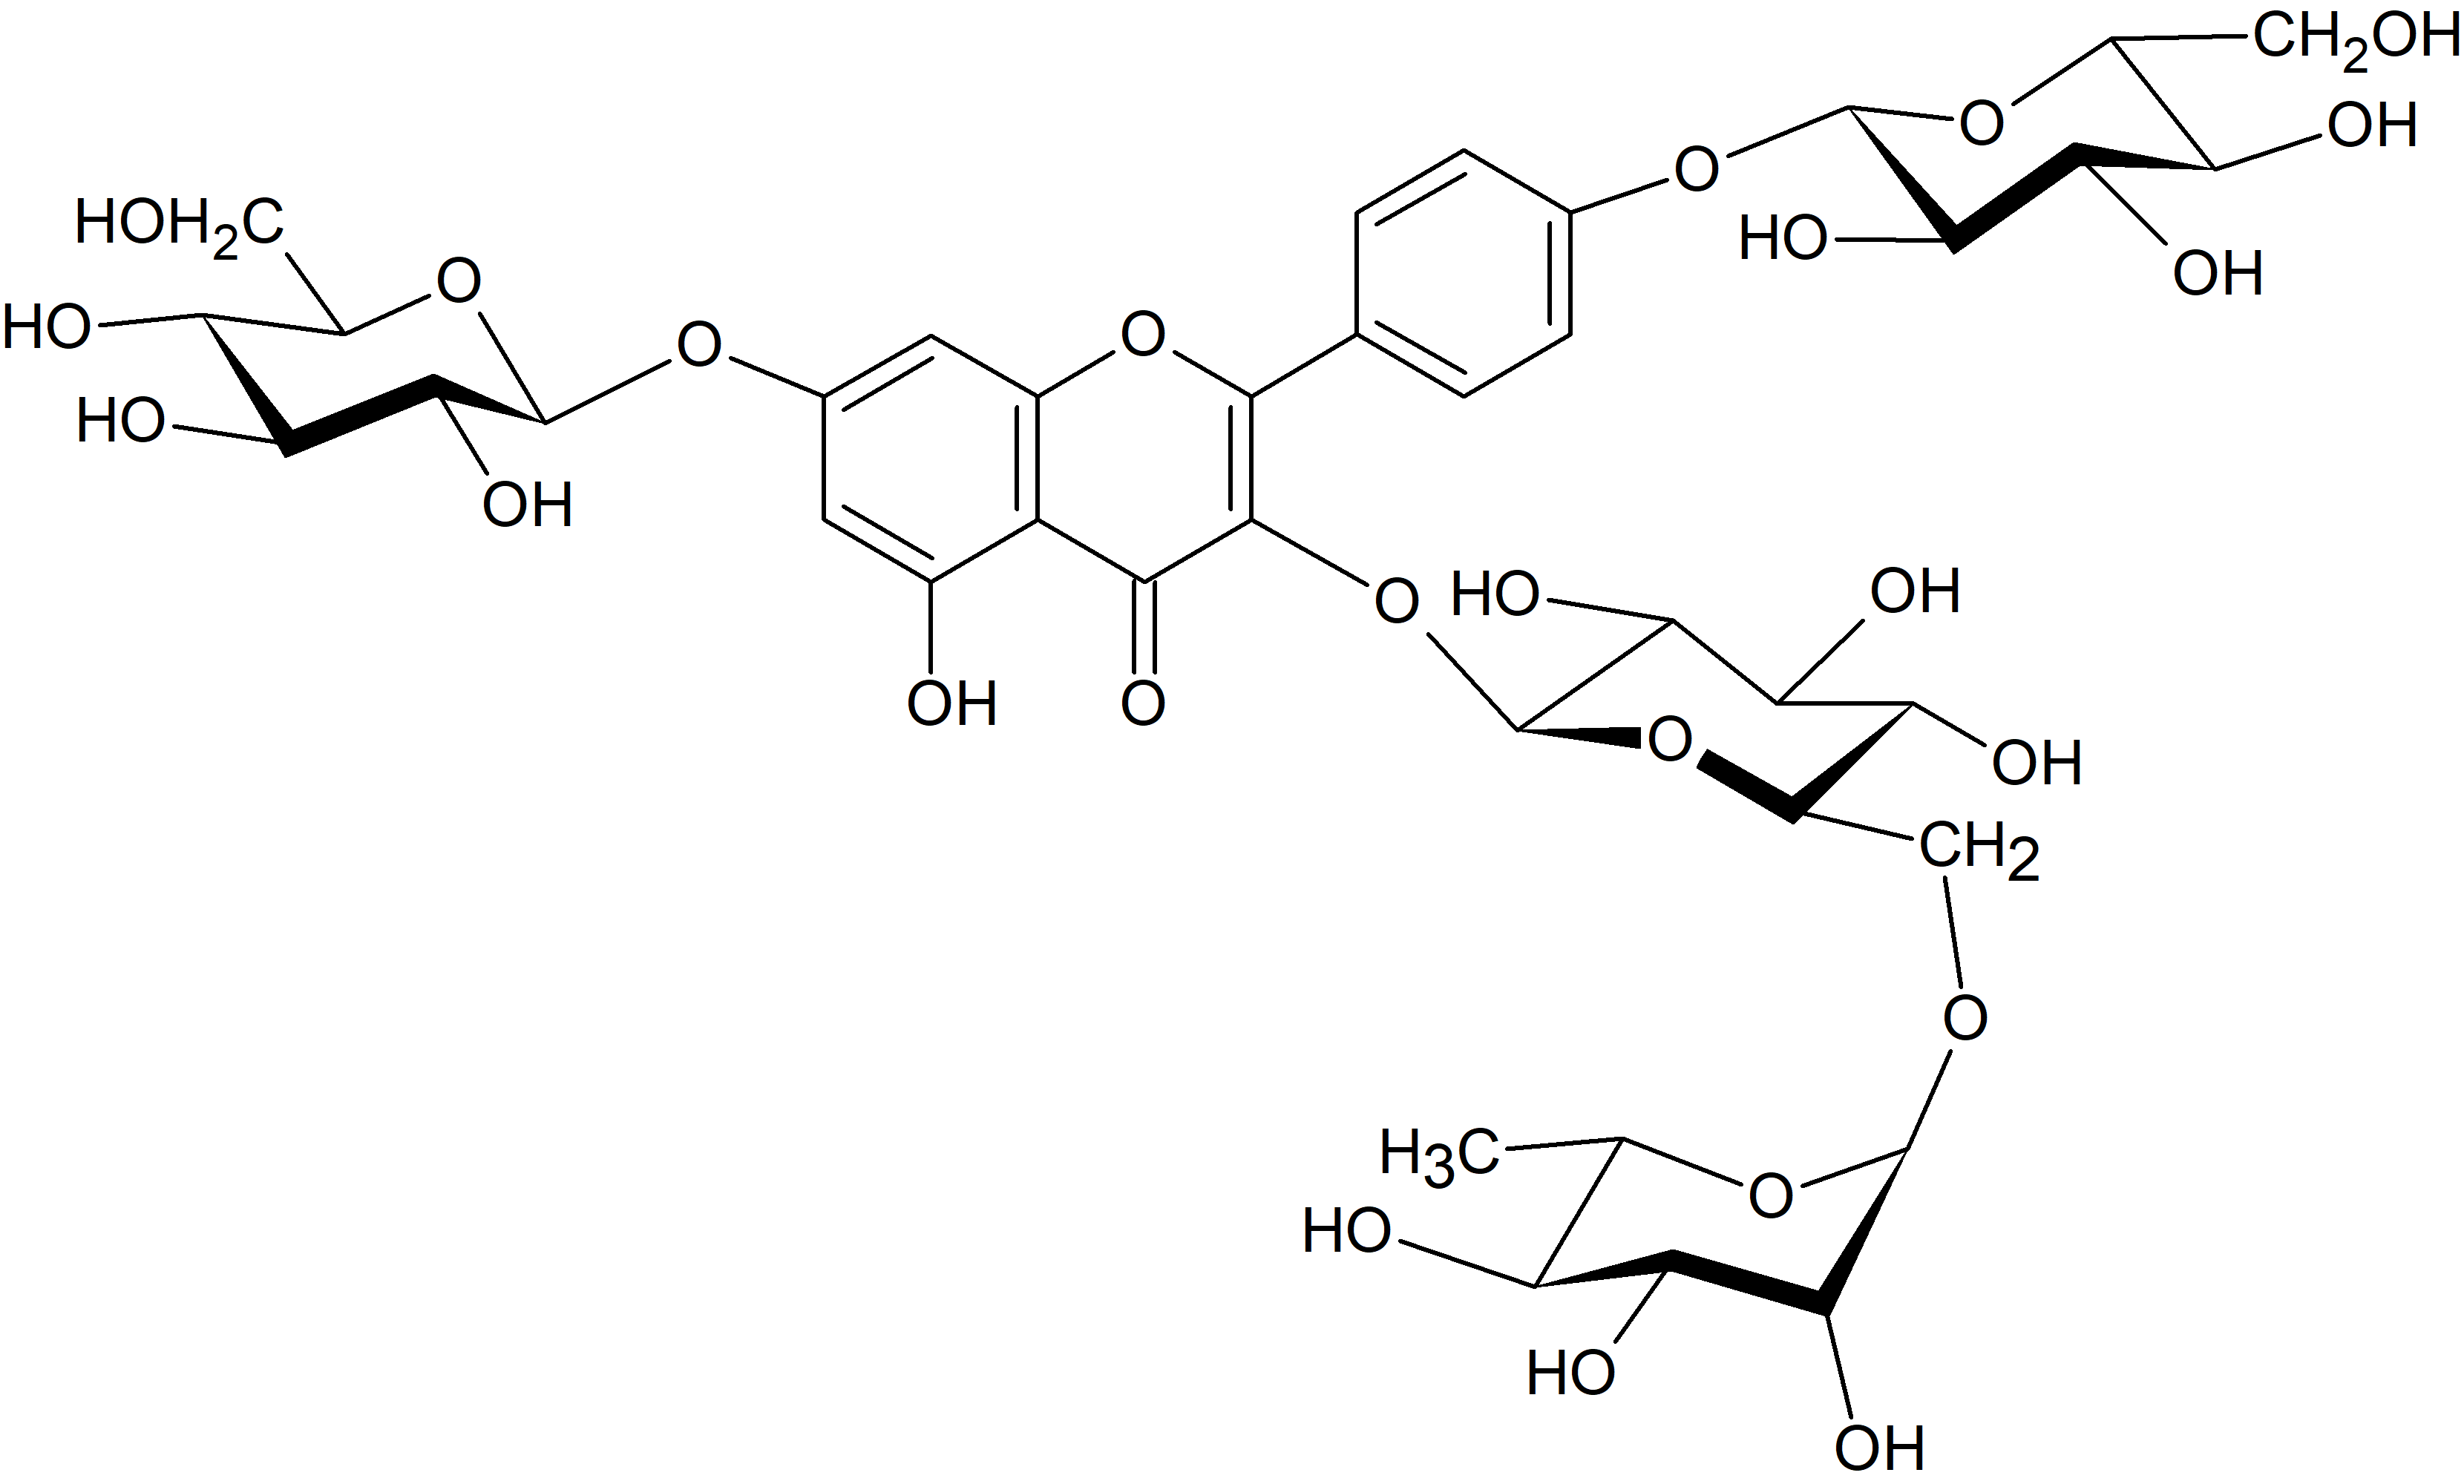 Kaempferol 3-O-rutinoside-7,4'-di-O-glucoside